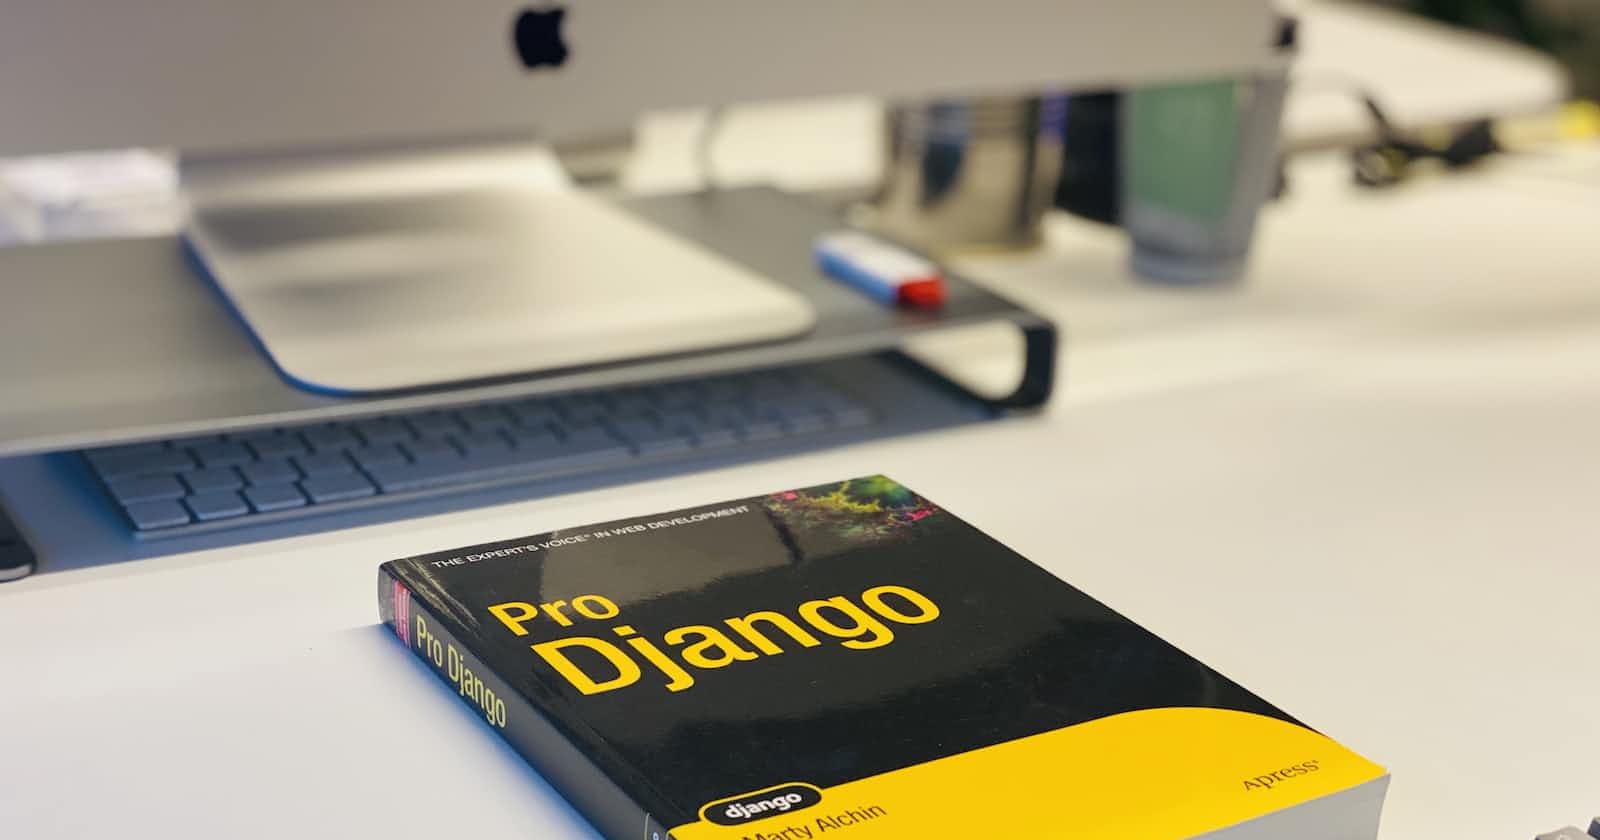 Top 10 Features of Django That Make Web Development a Breeze